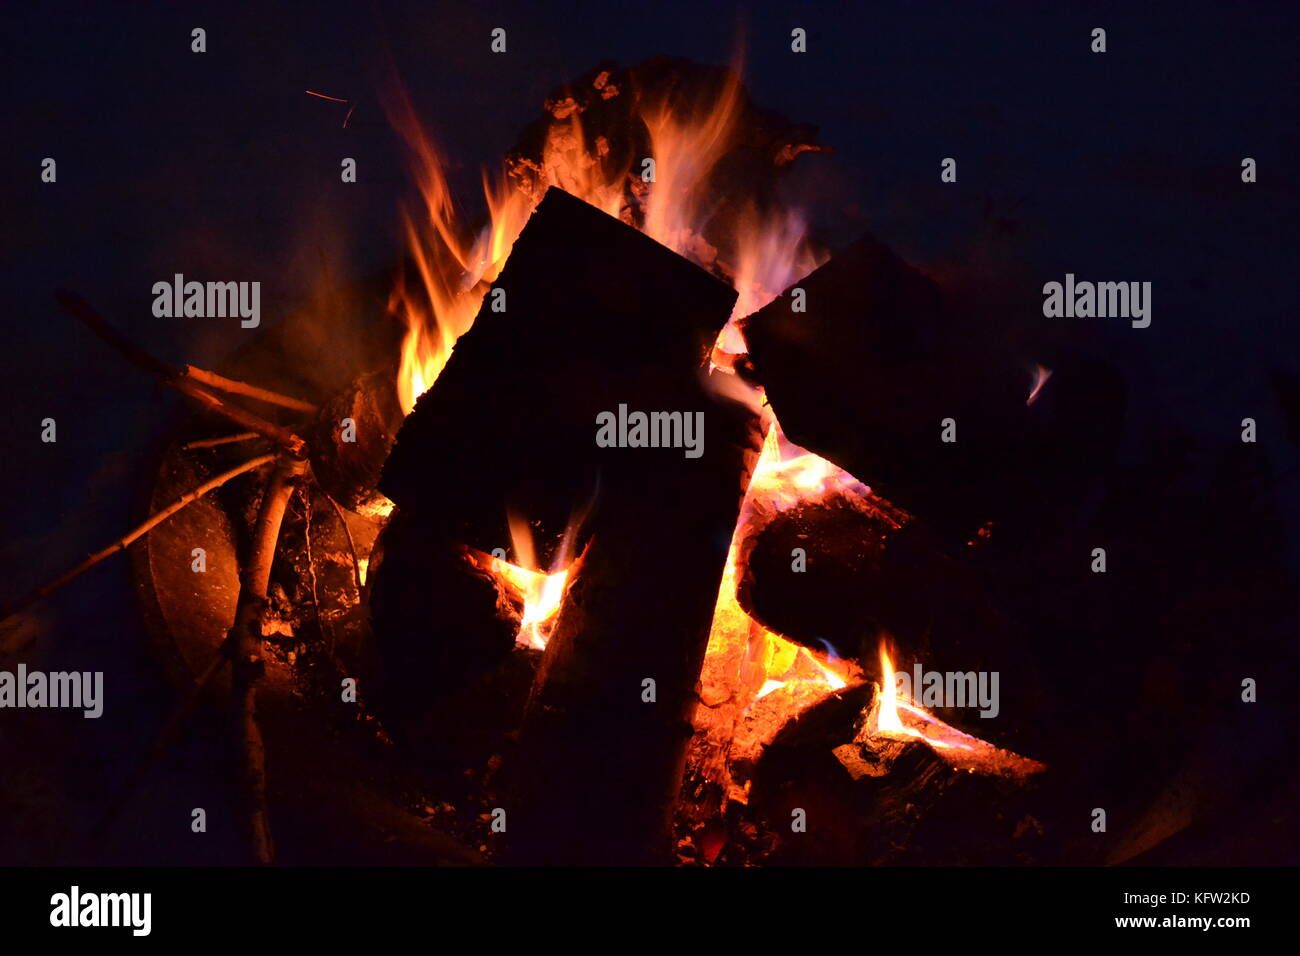 Night time campfire in dark background Stock Photo